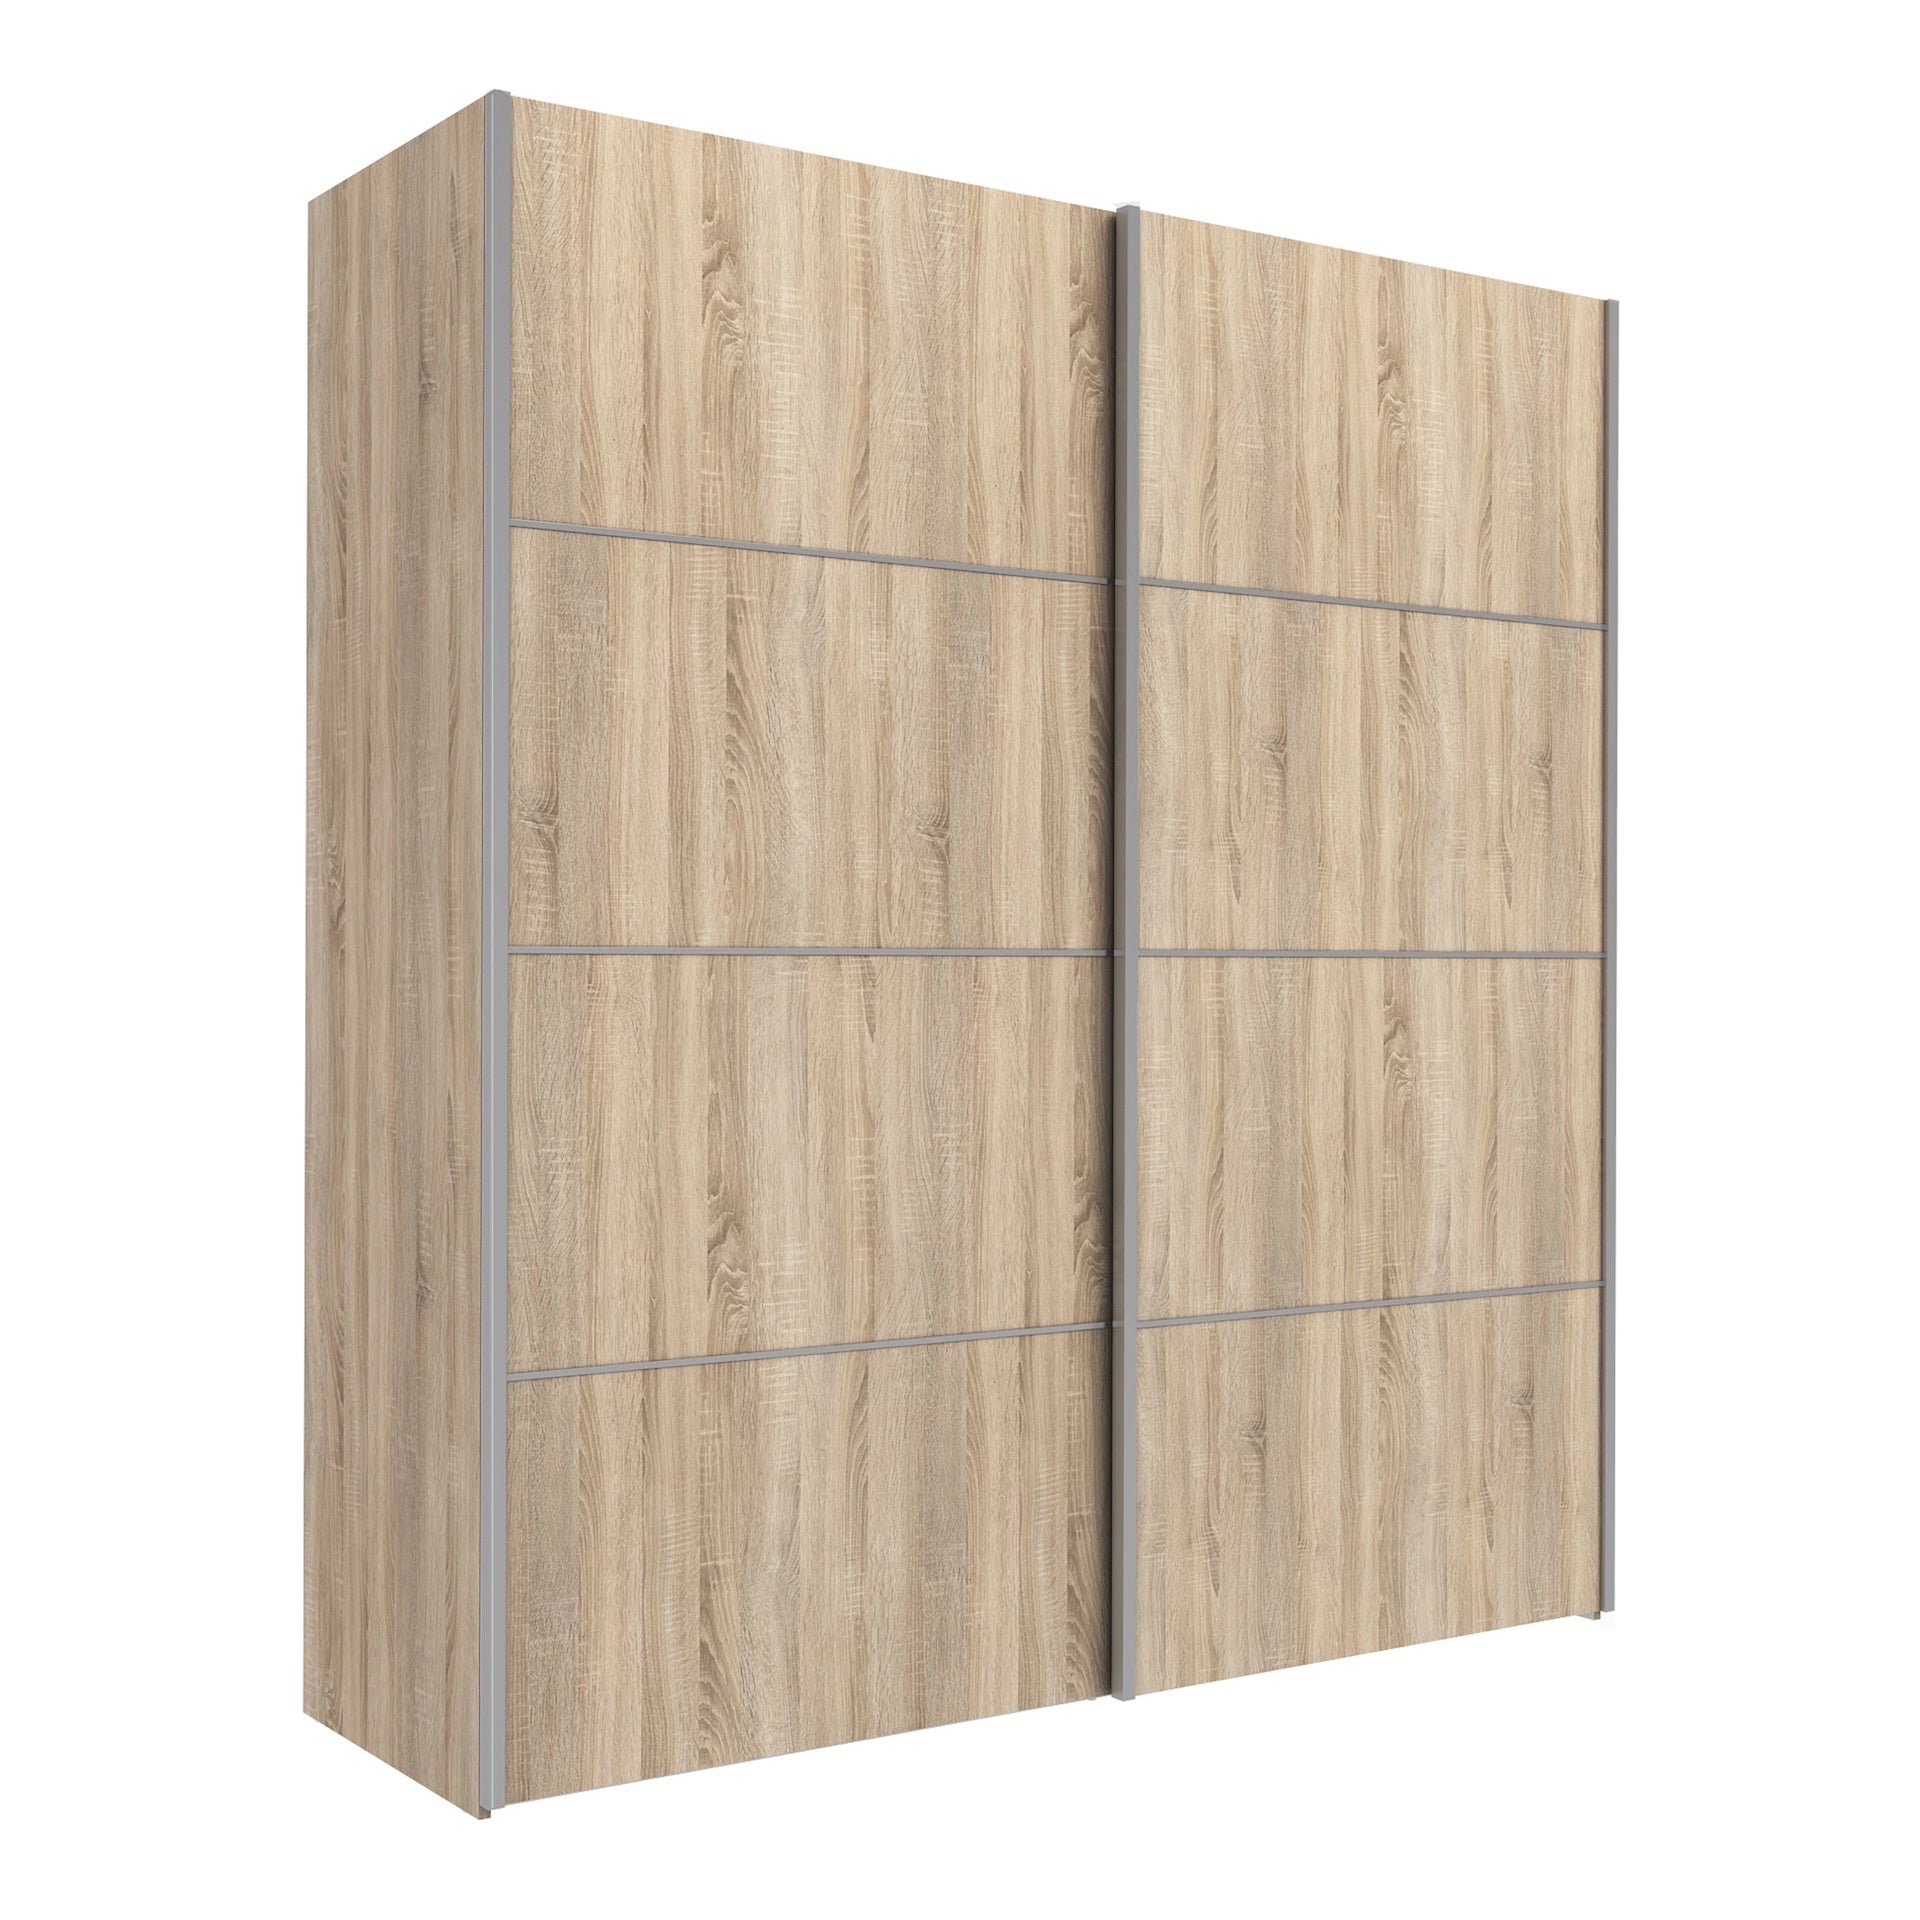 Furniture To Go Verona Sliding Wardrobe 180cm in Oak with Oak Doors with 5 Shelves